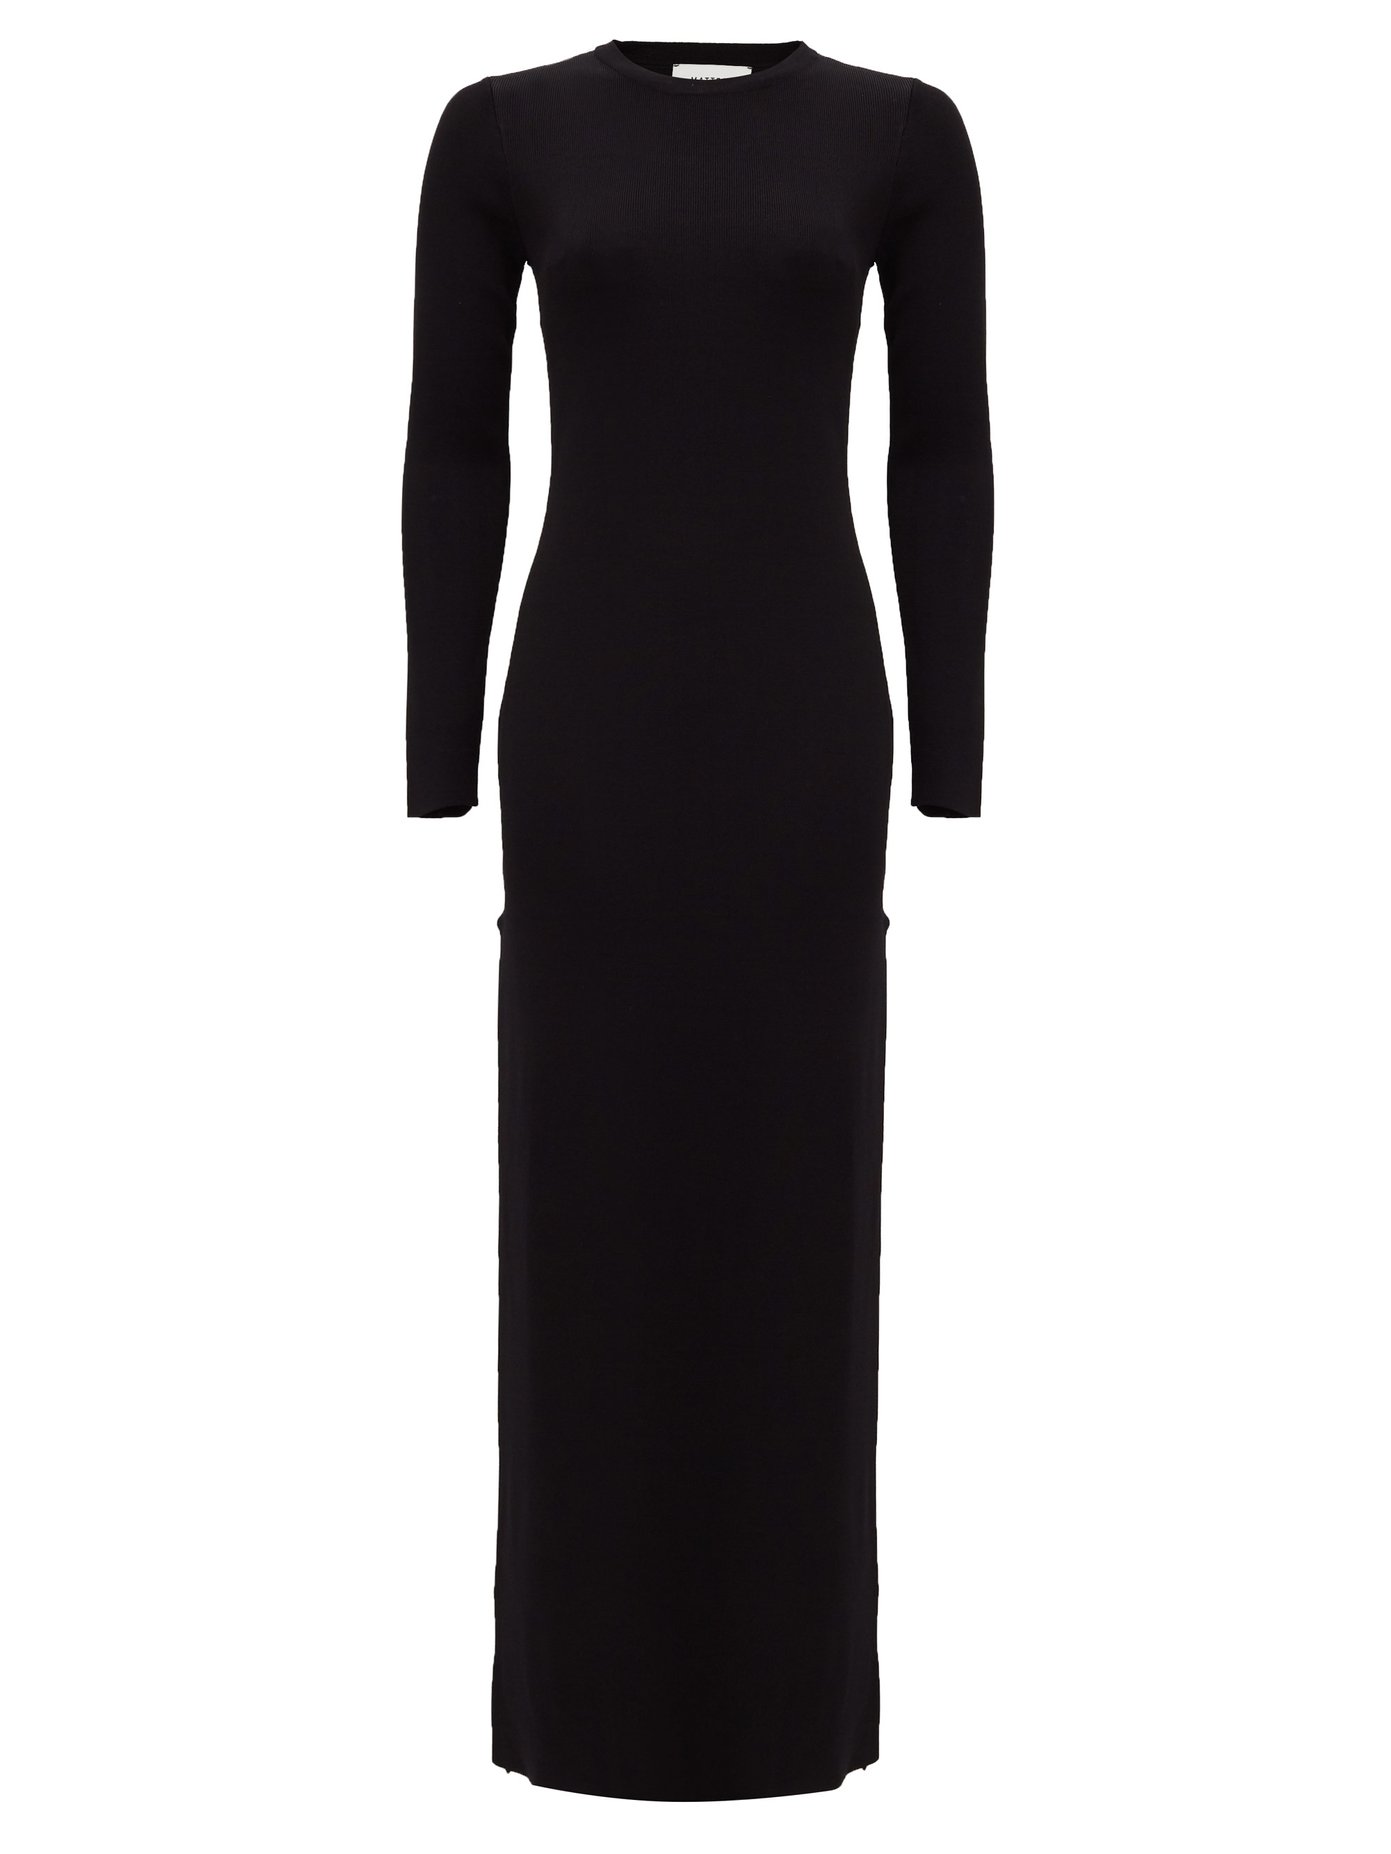 black knitted maxi dress